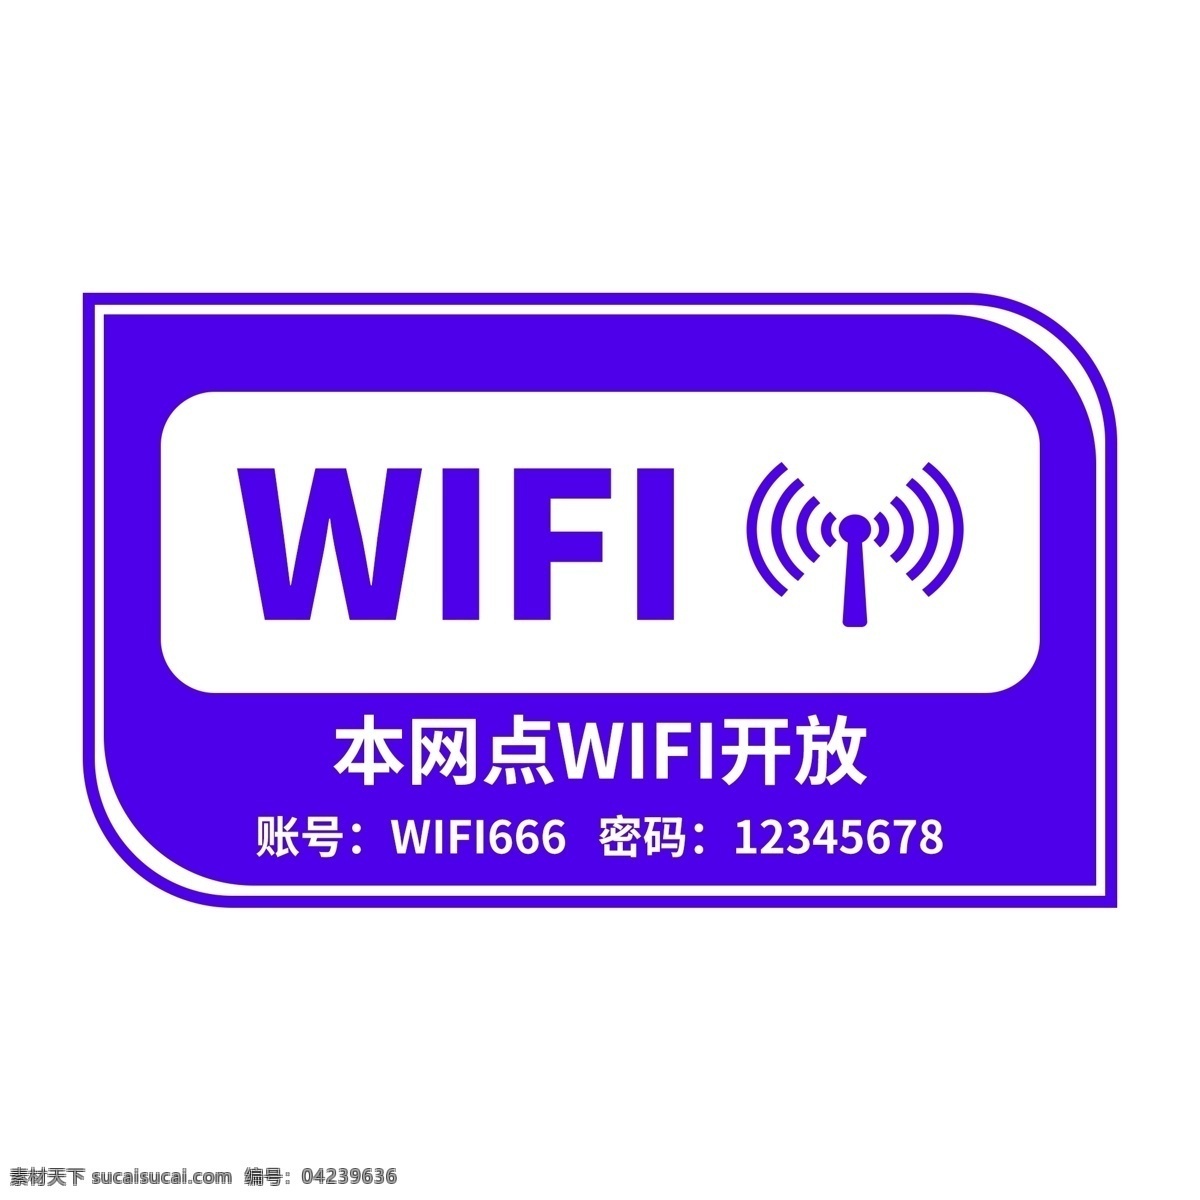 wifi牌 共享wifi 公共wifi wifi开放 开放wifi wifi 常用标牌